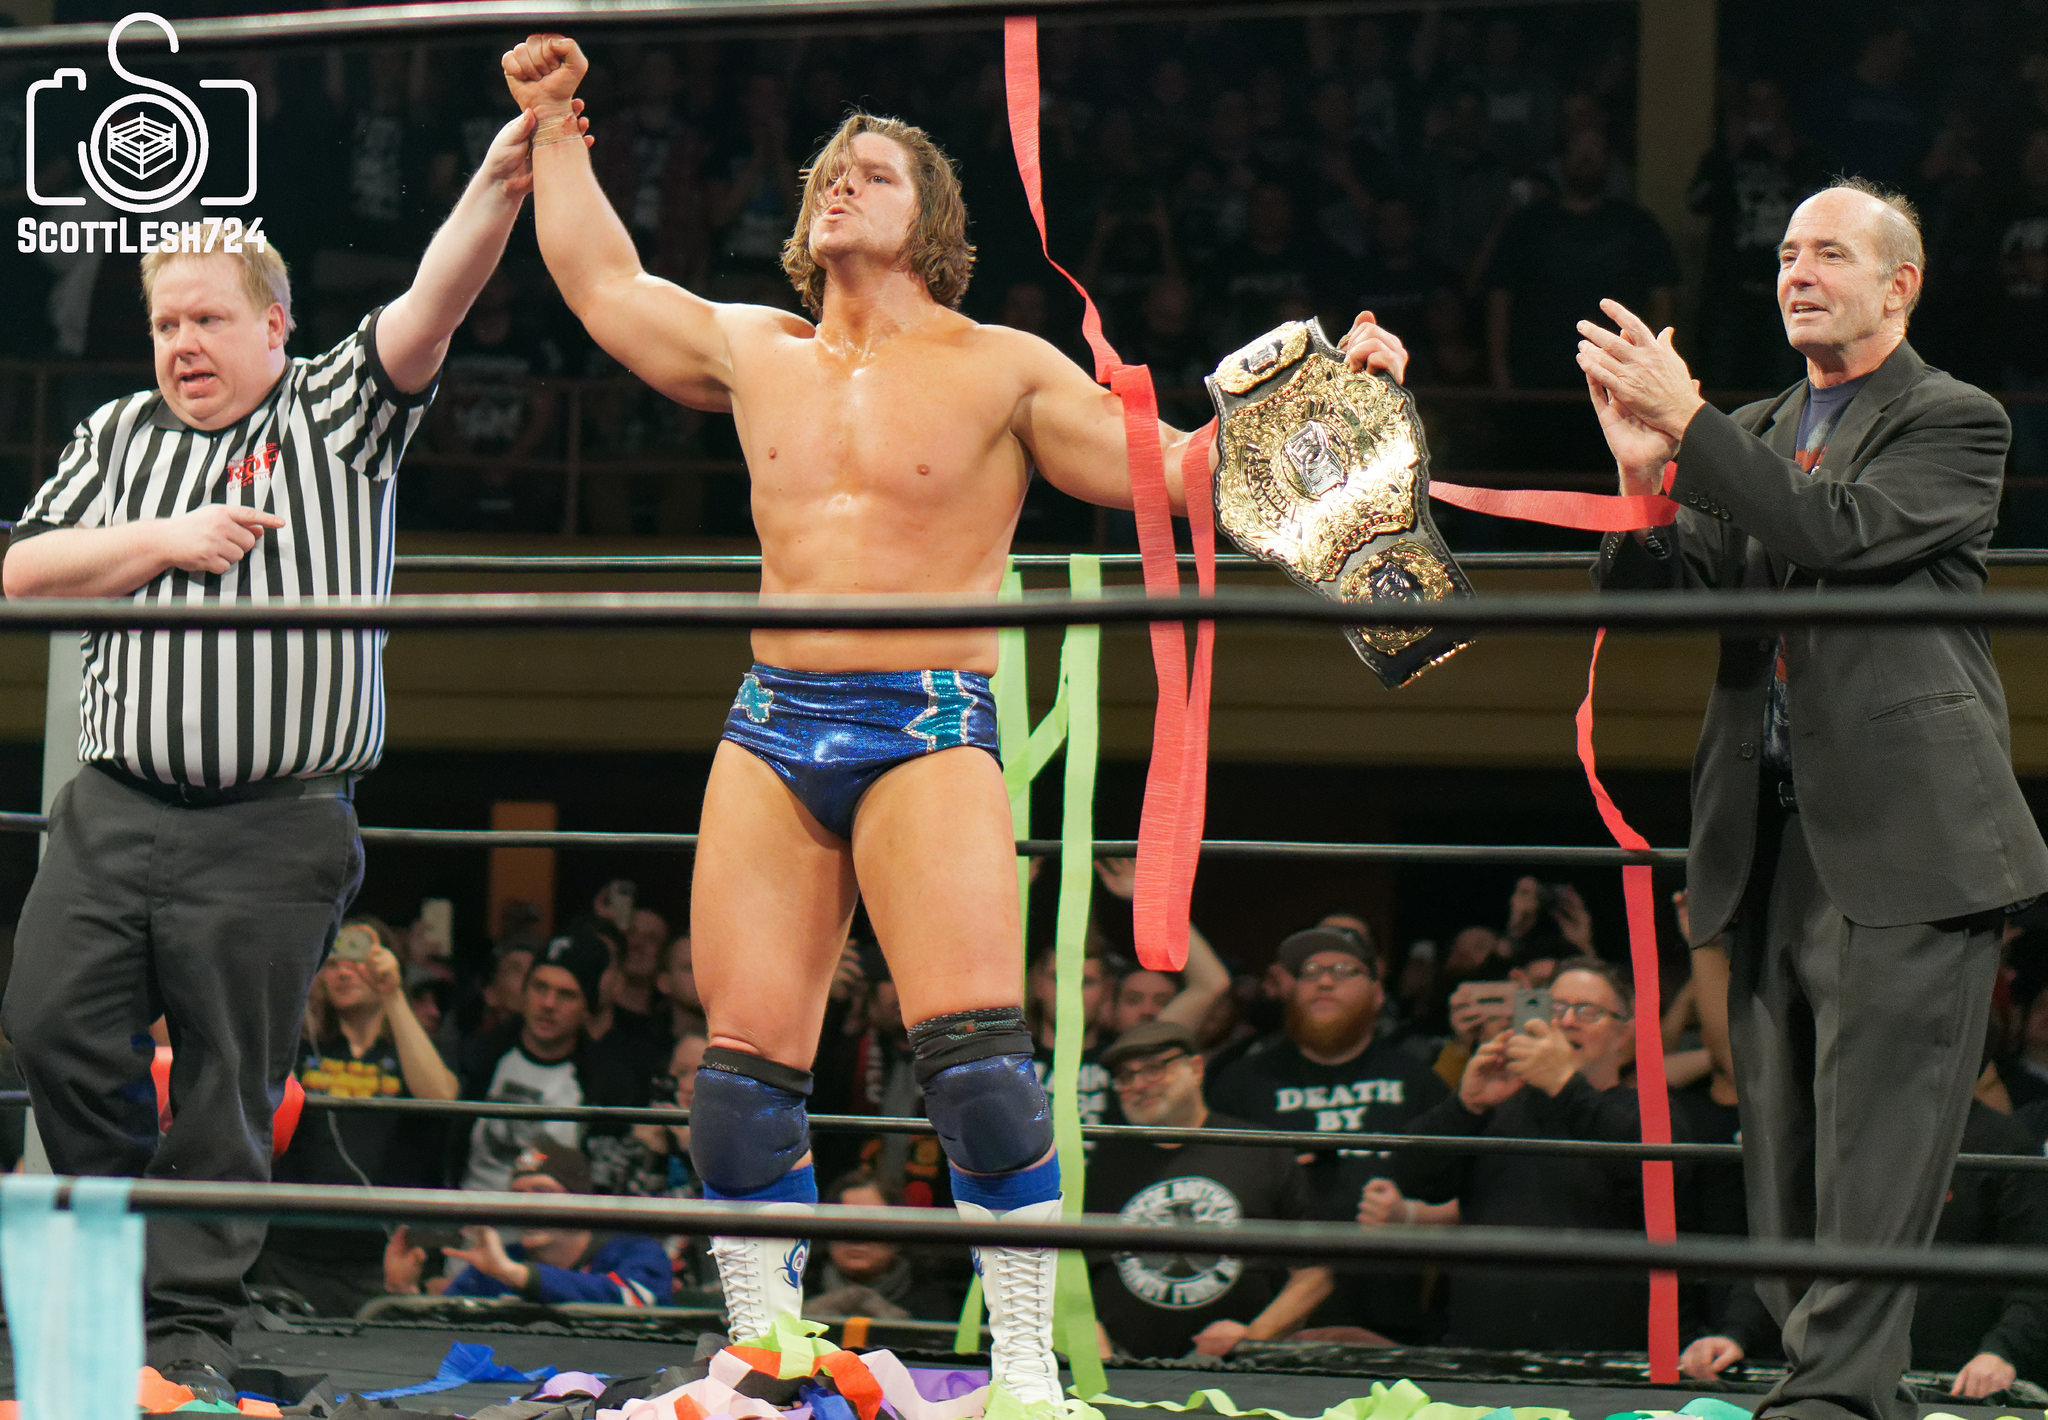 Fite TV Top Ten Best Wrestlers of the Week features ROH Talent